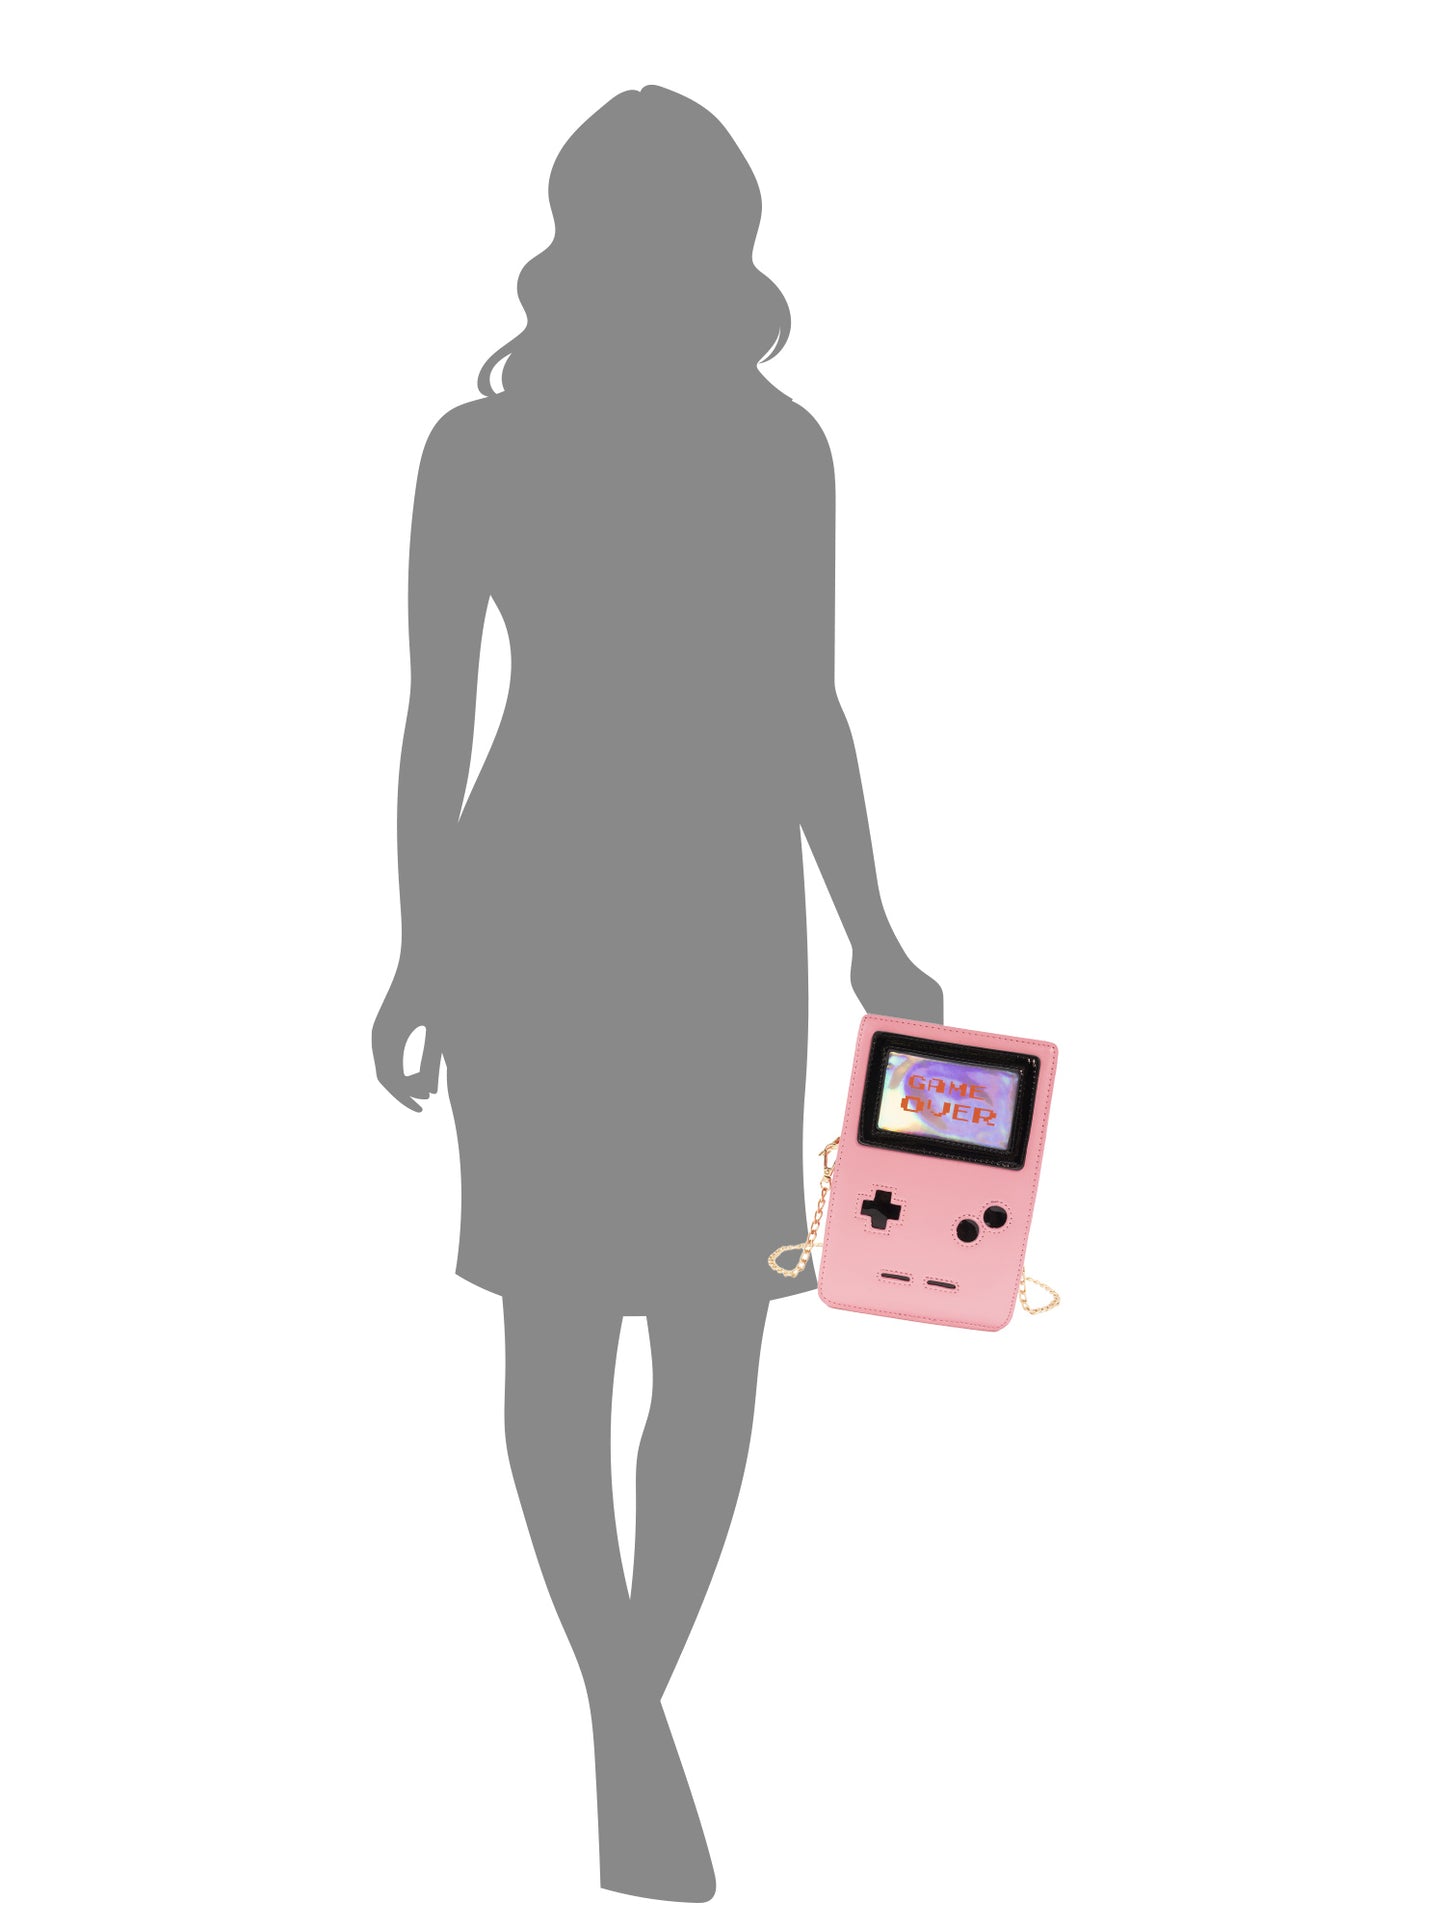 Retro 8-Bit Gamer Handbag Pink - Bewaltz